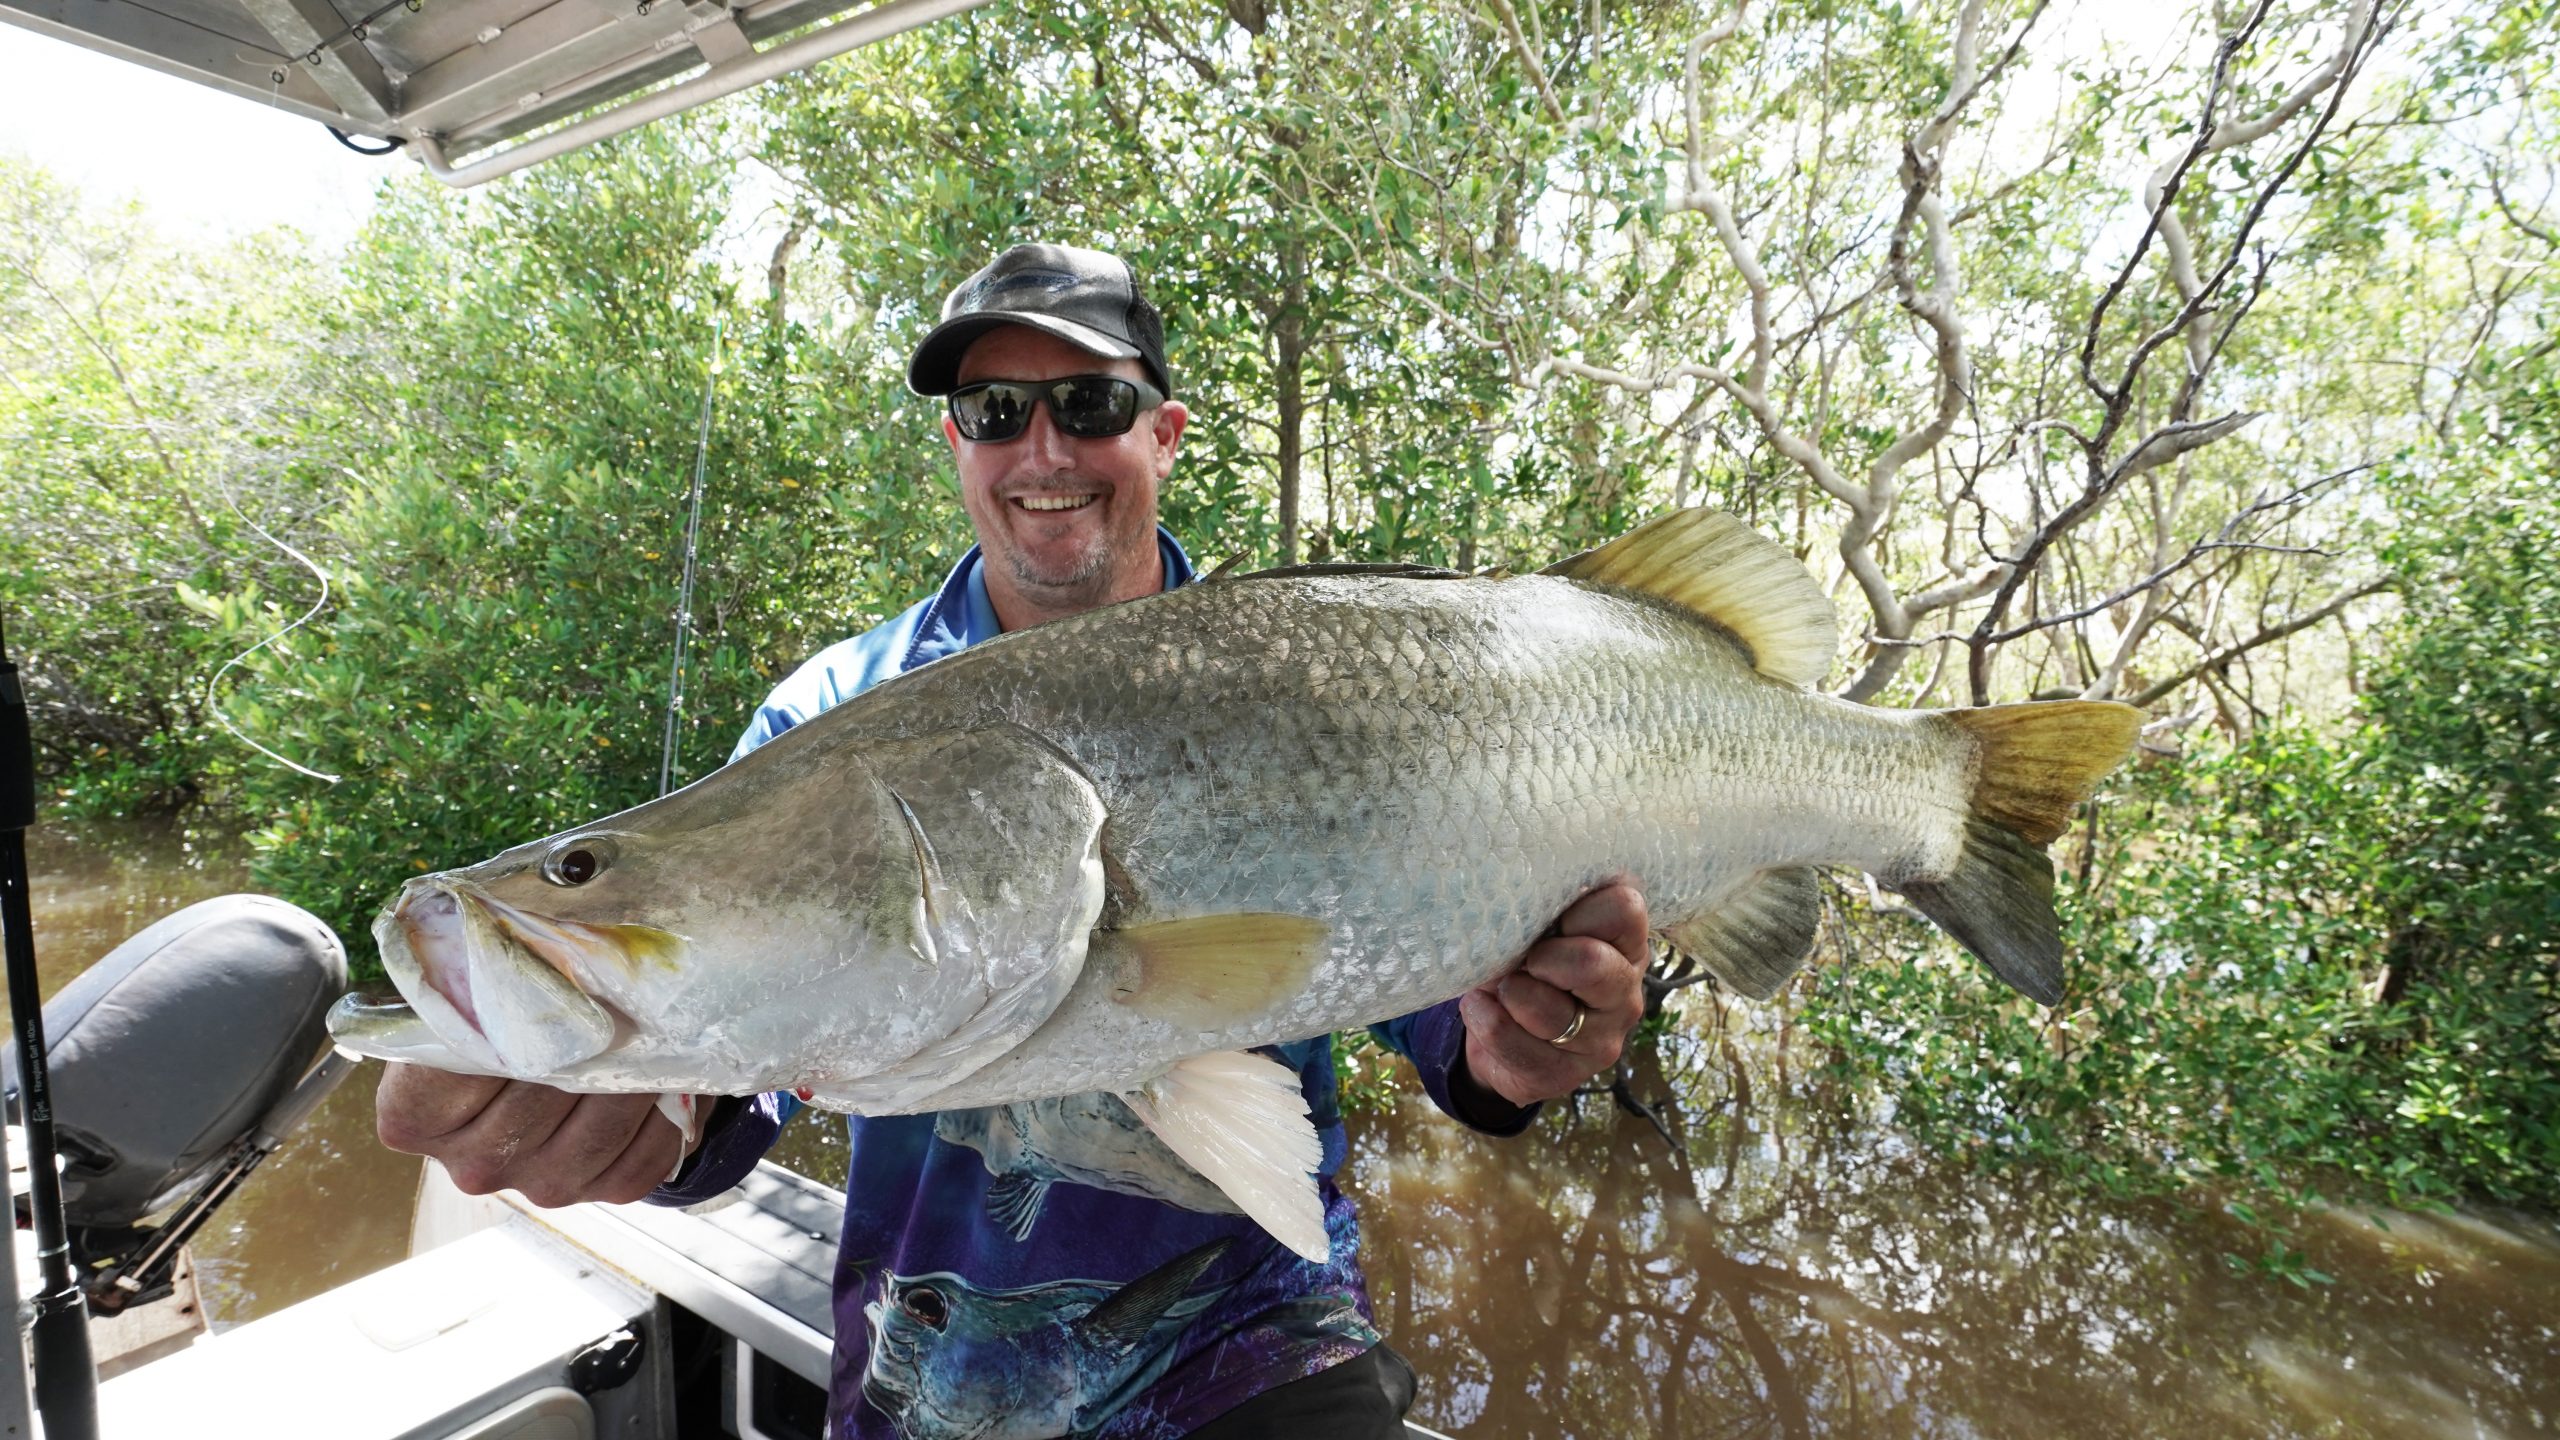 UPF 50+ Head Scarf – Mark Berg's Fishing Addiction